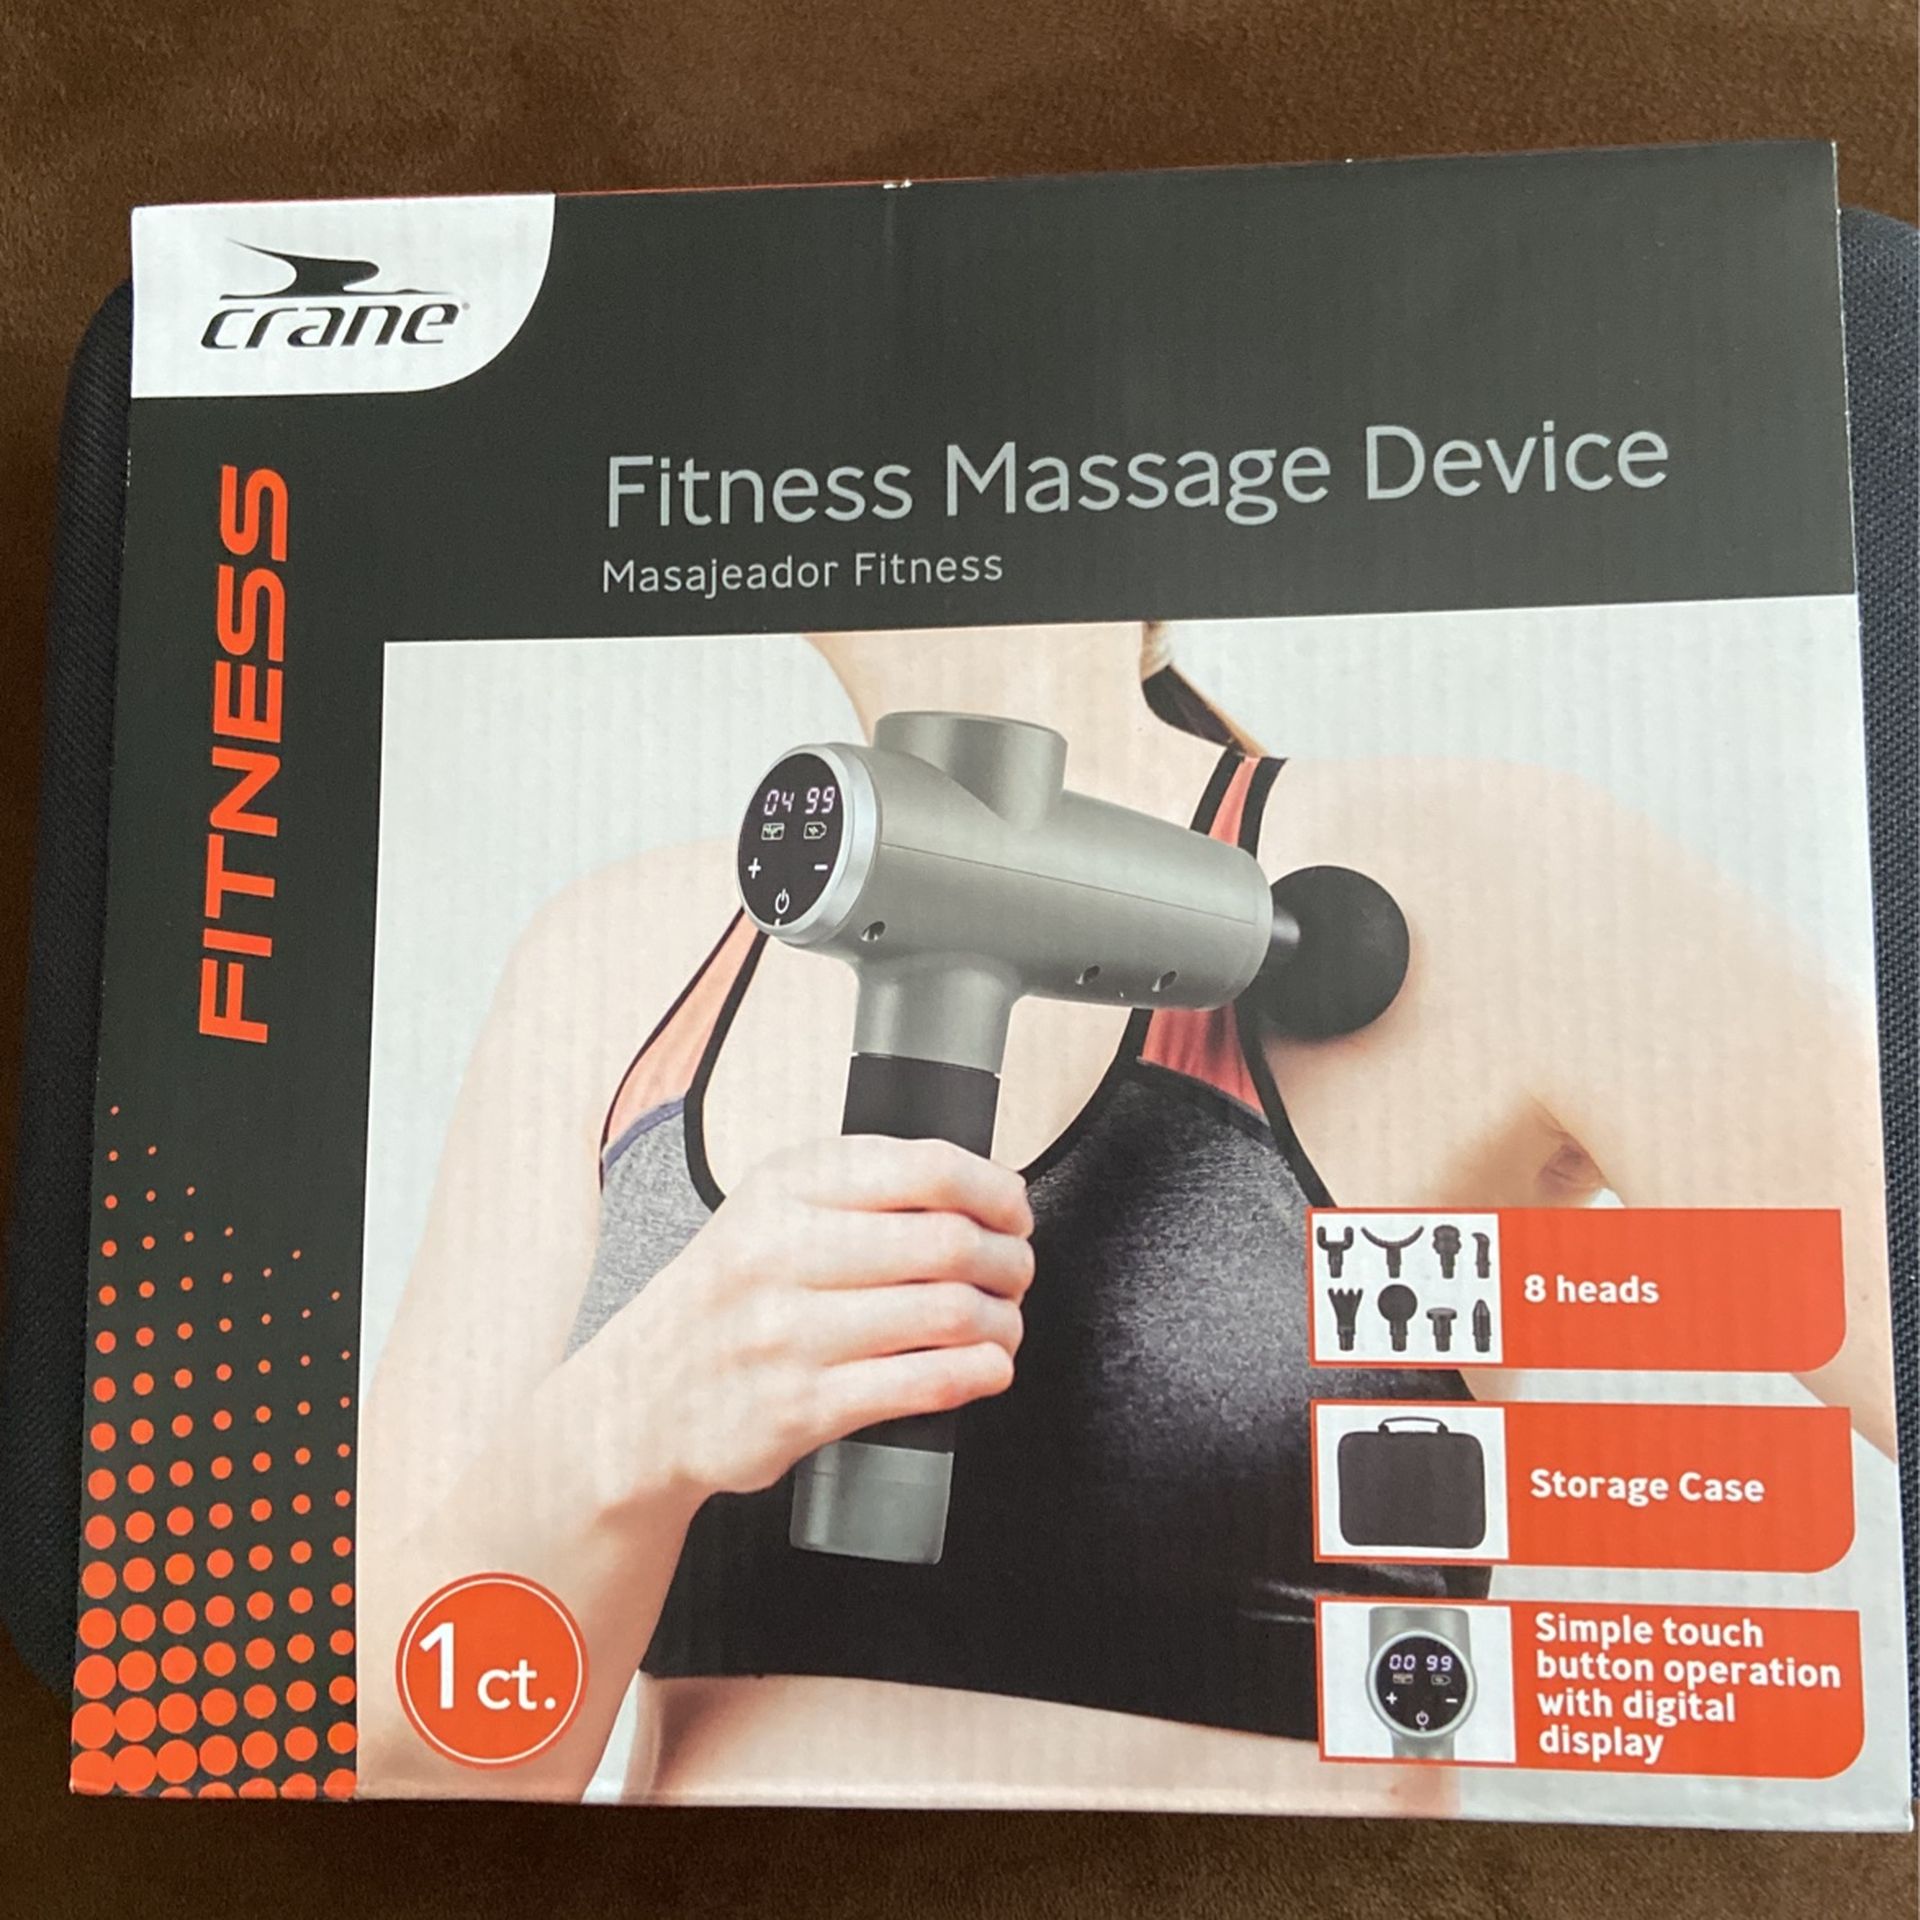 Fitness Massage Device